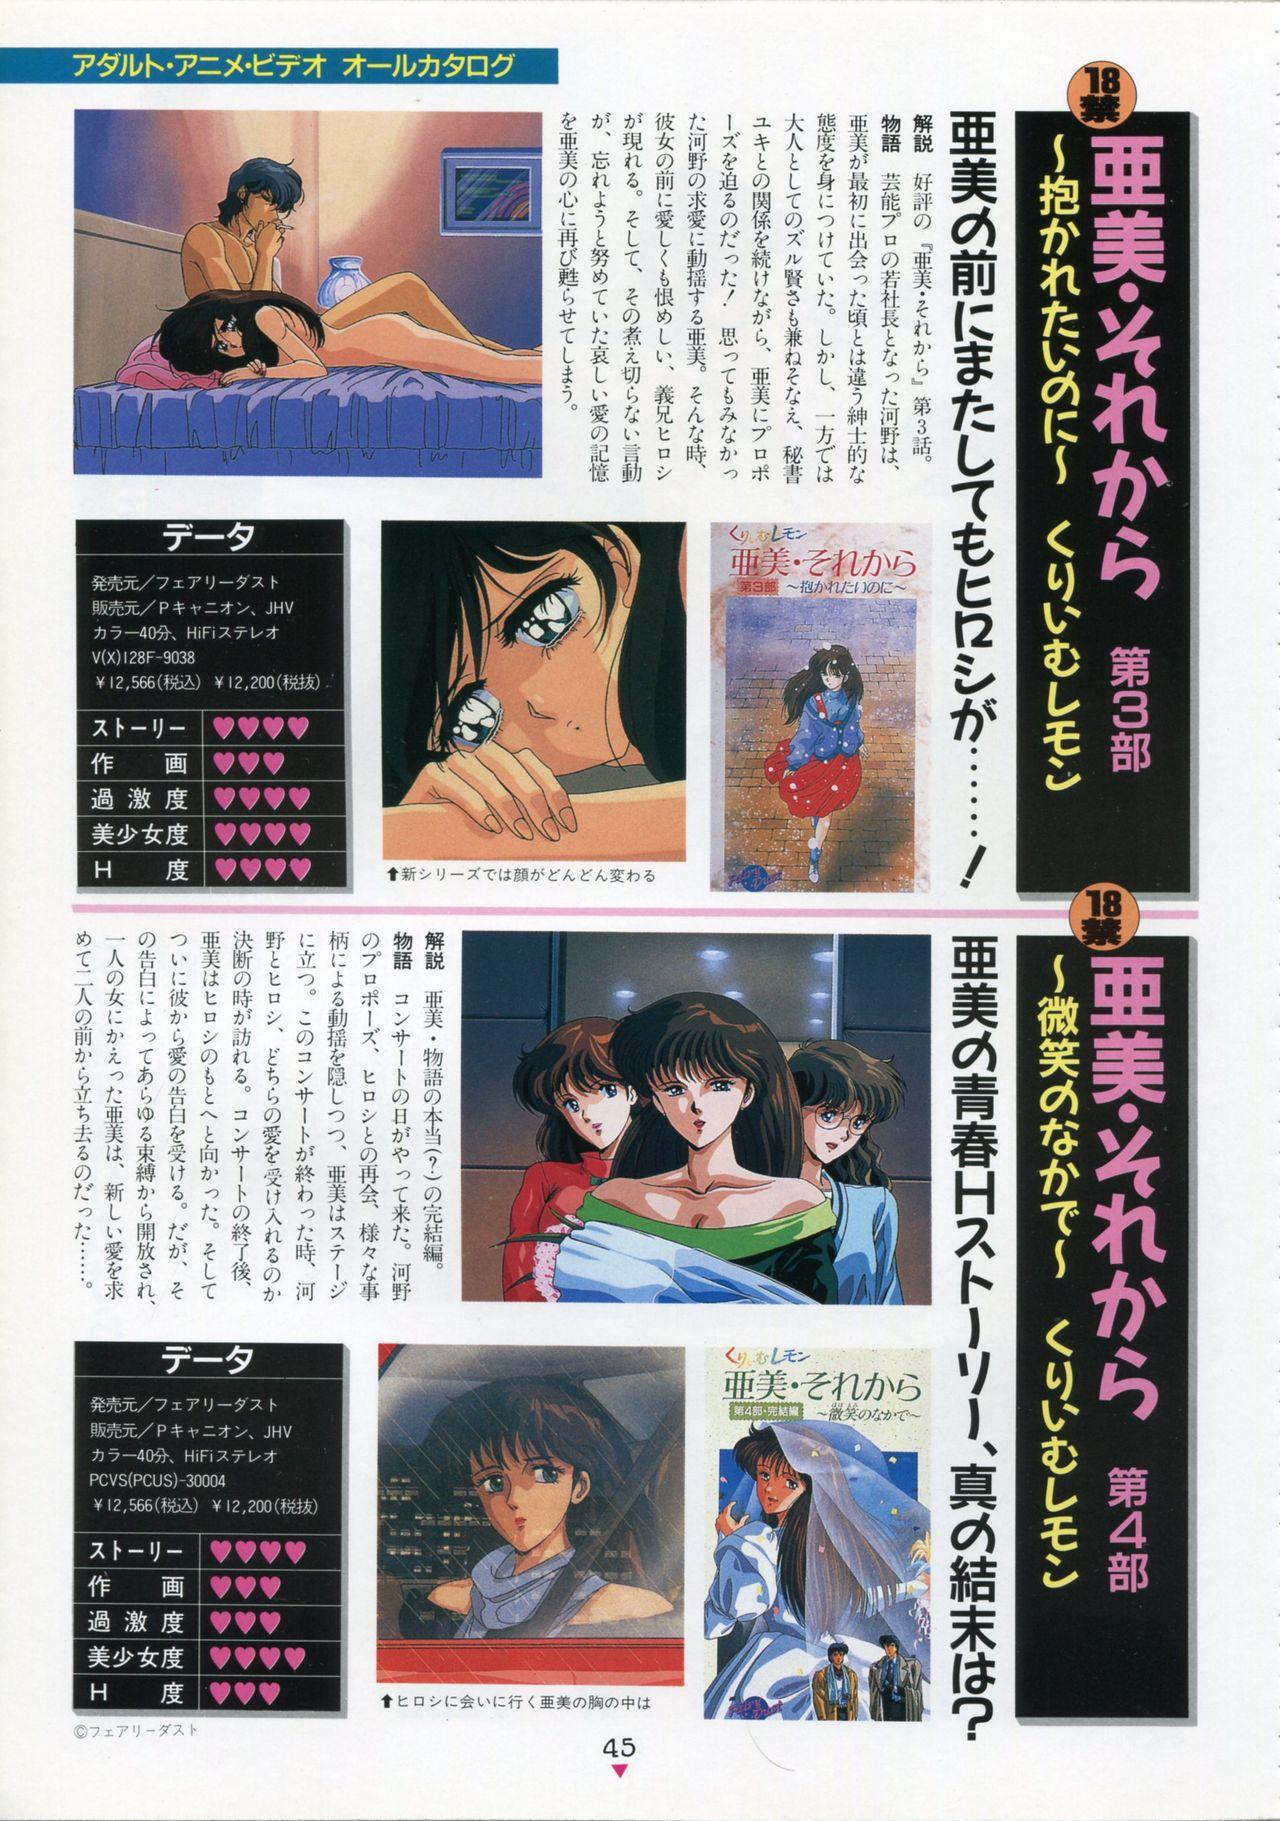 Bishoujo Anime Daizenshuu - Adult Animation Video Catalog 1991 40